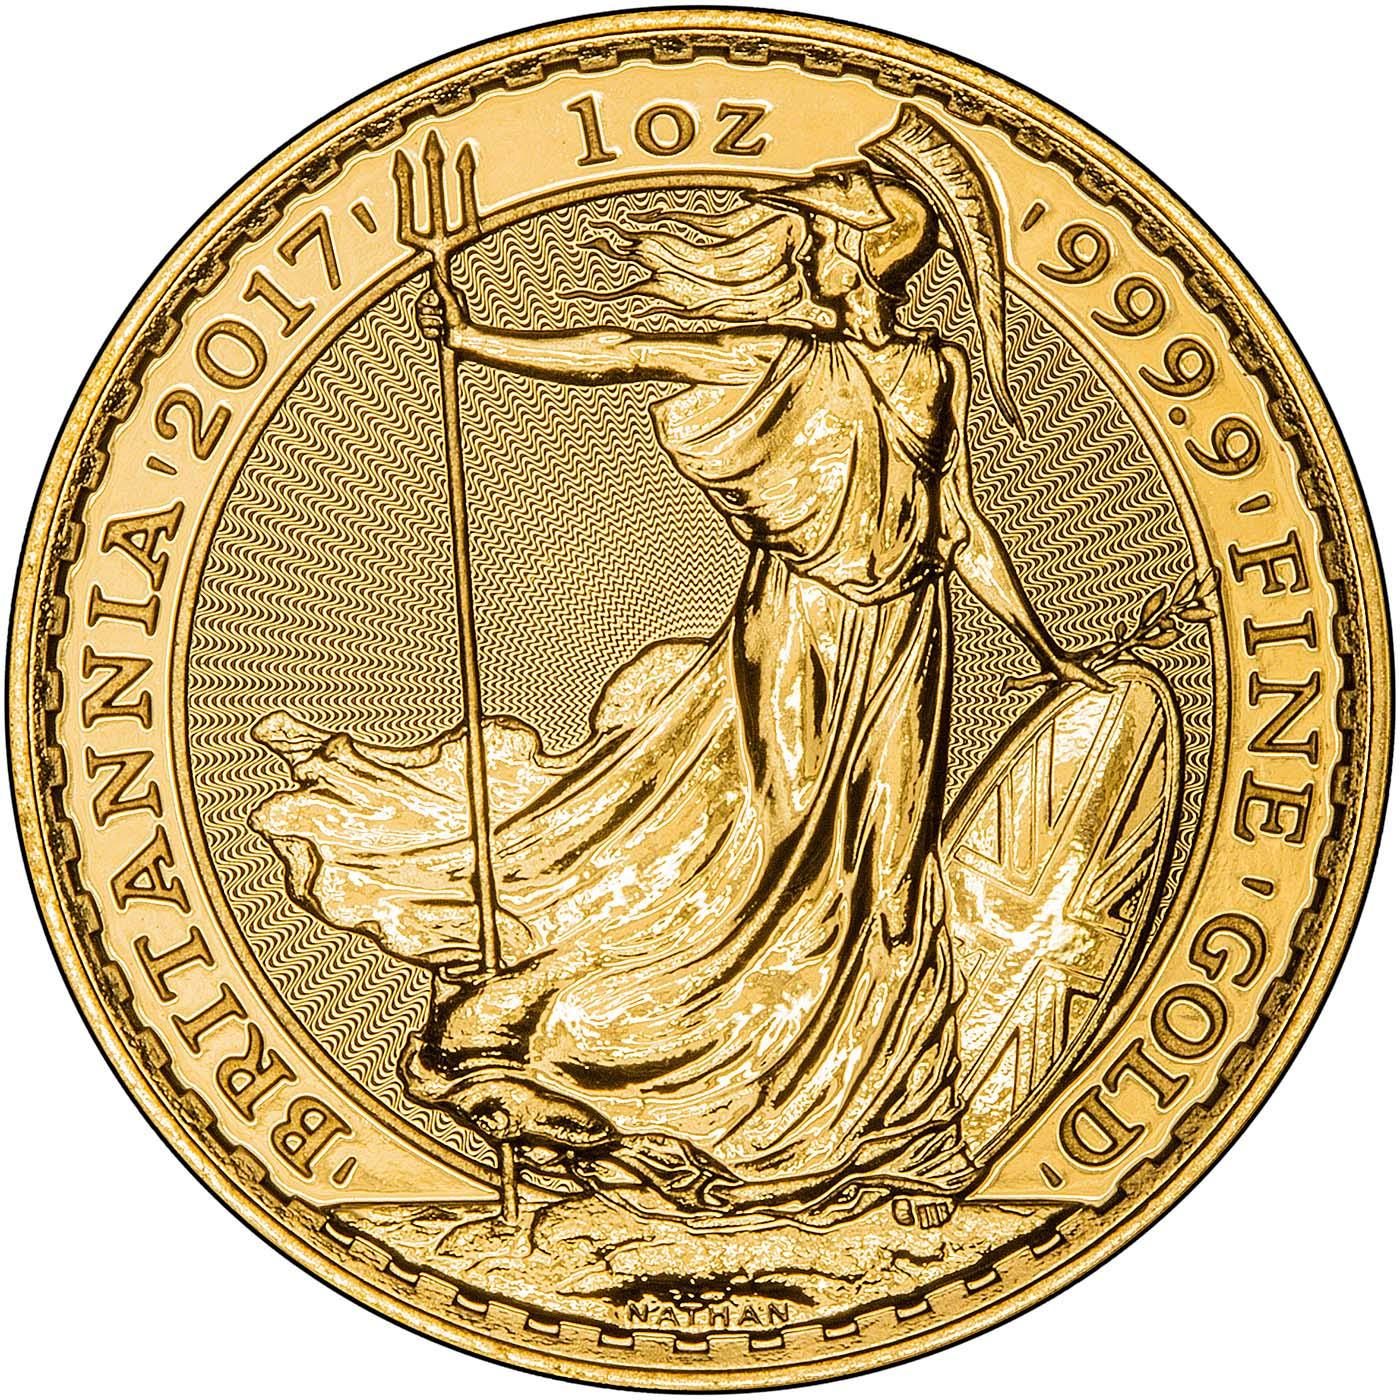 2017-gold-bullion-ungraded-1-ounce-britannia-coin-single-united-kingdom-the-royal-mint-1-5462007